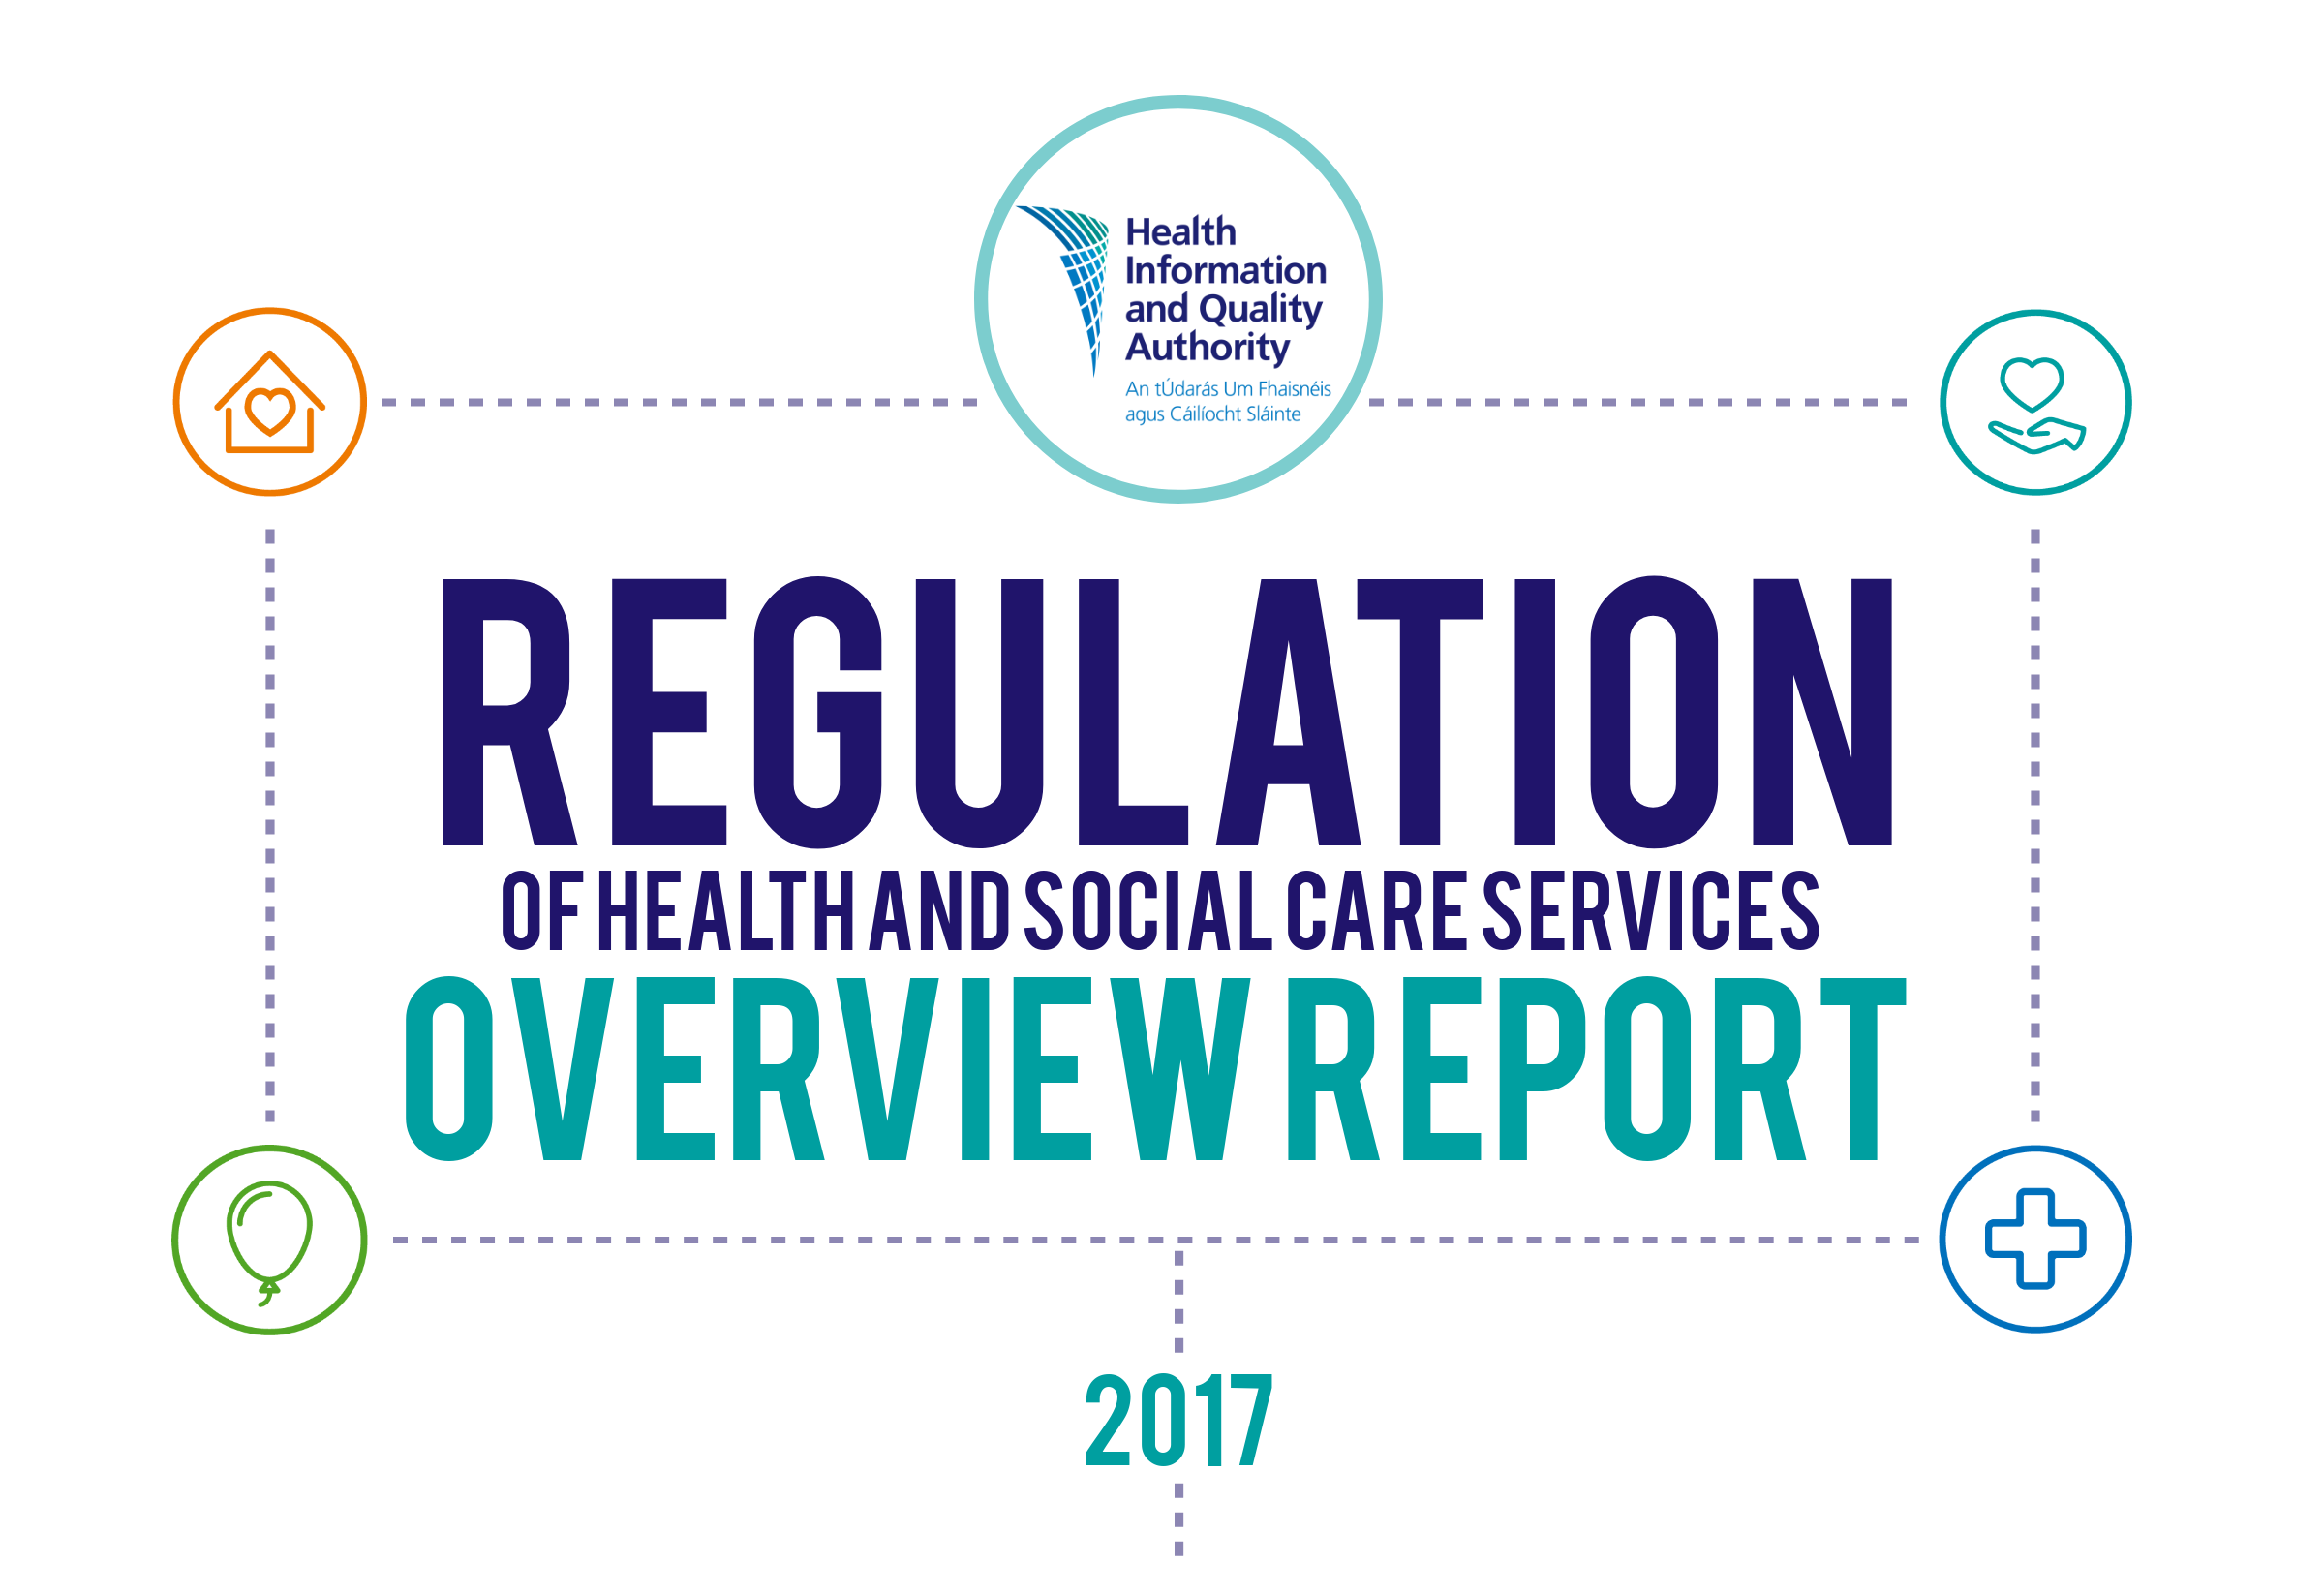 Regulation overview report 2017